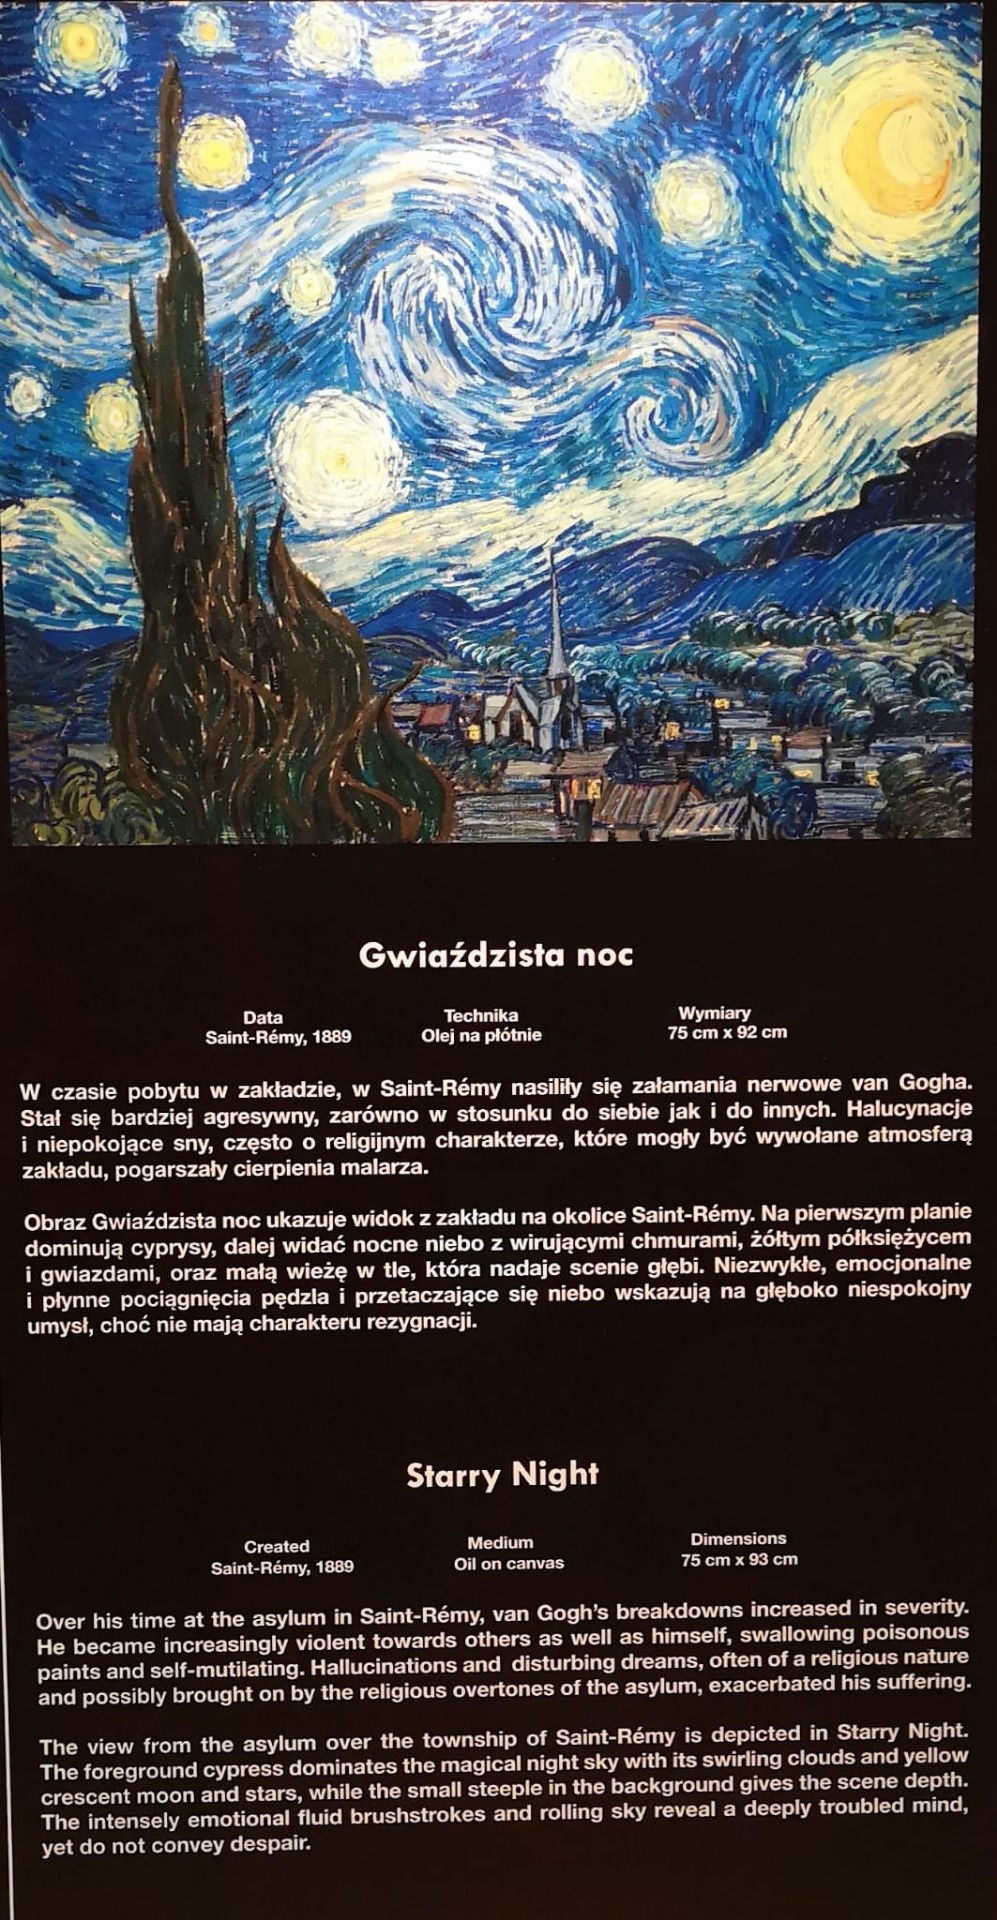 Van Gogh Multi-Sensory Exhibition Gdańsk - Obrazek 6